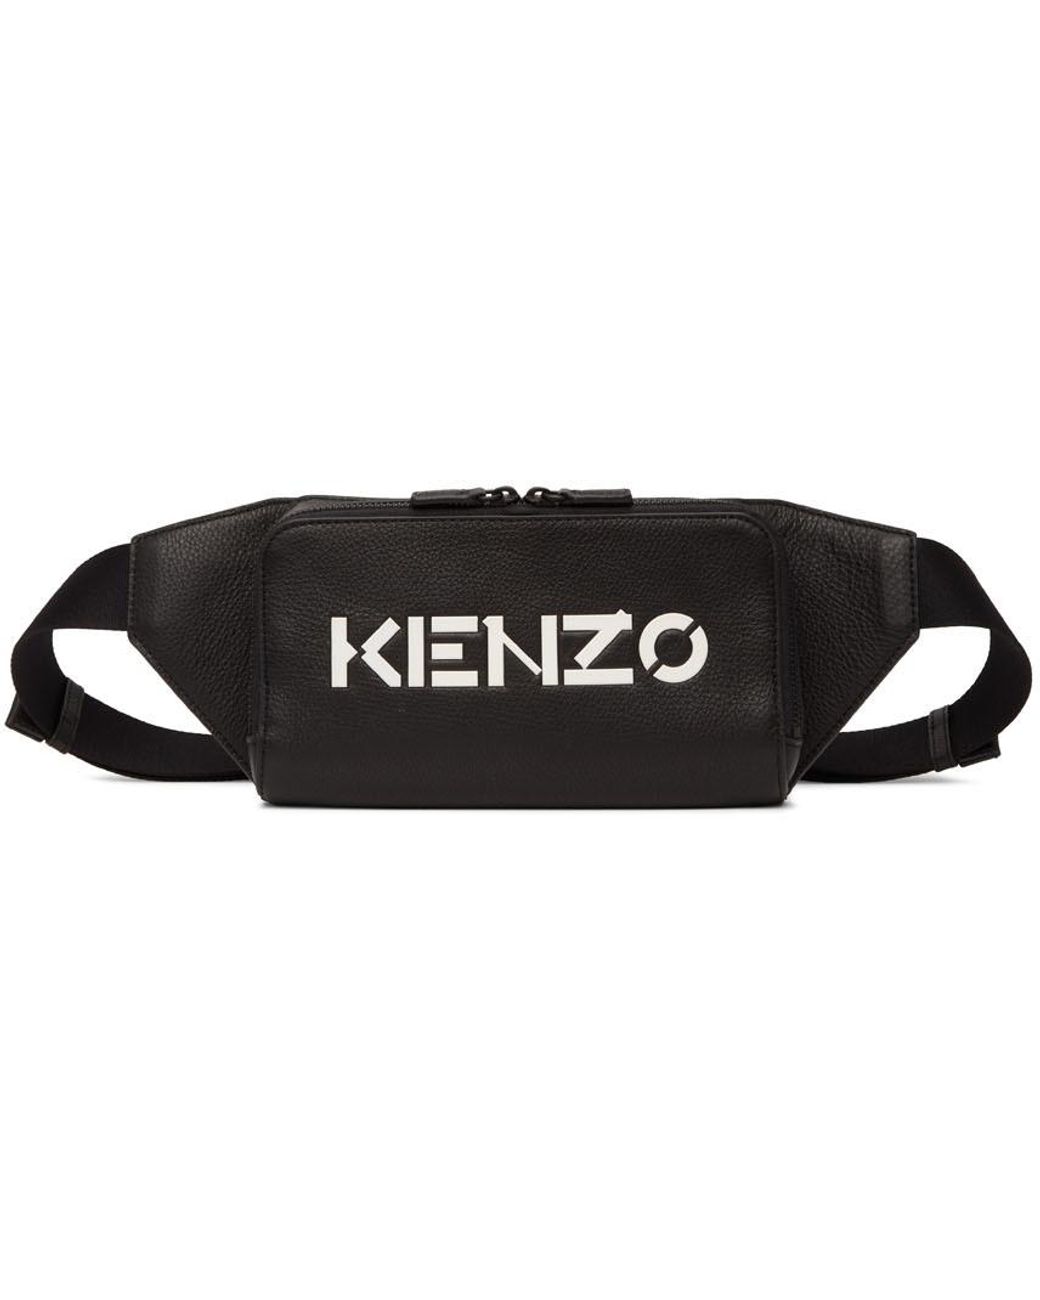 KENZO Leather Black Logo Belt Bag for Men | Lyst